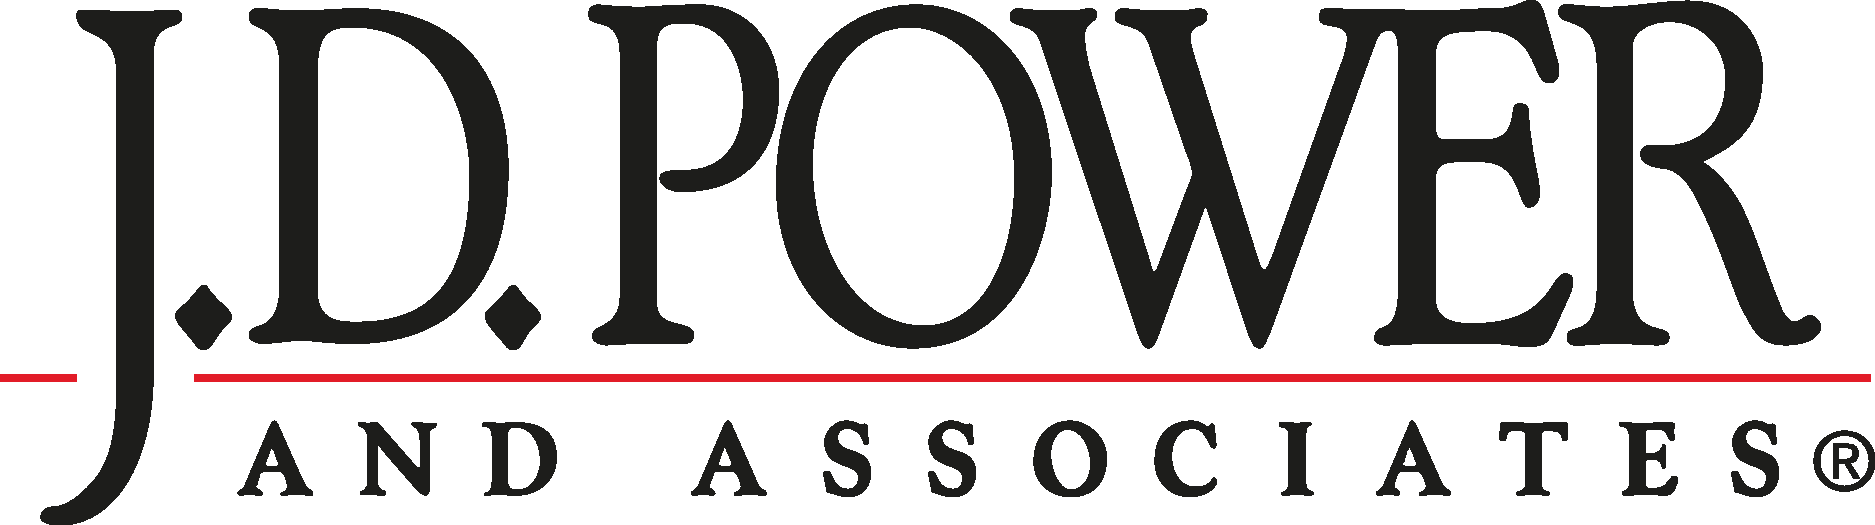 JD Power and Associates Logo Vector